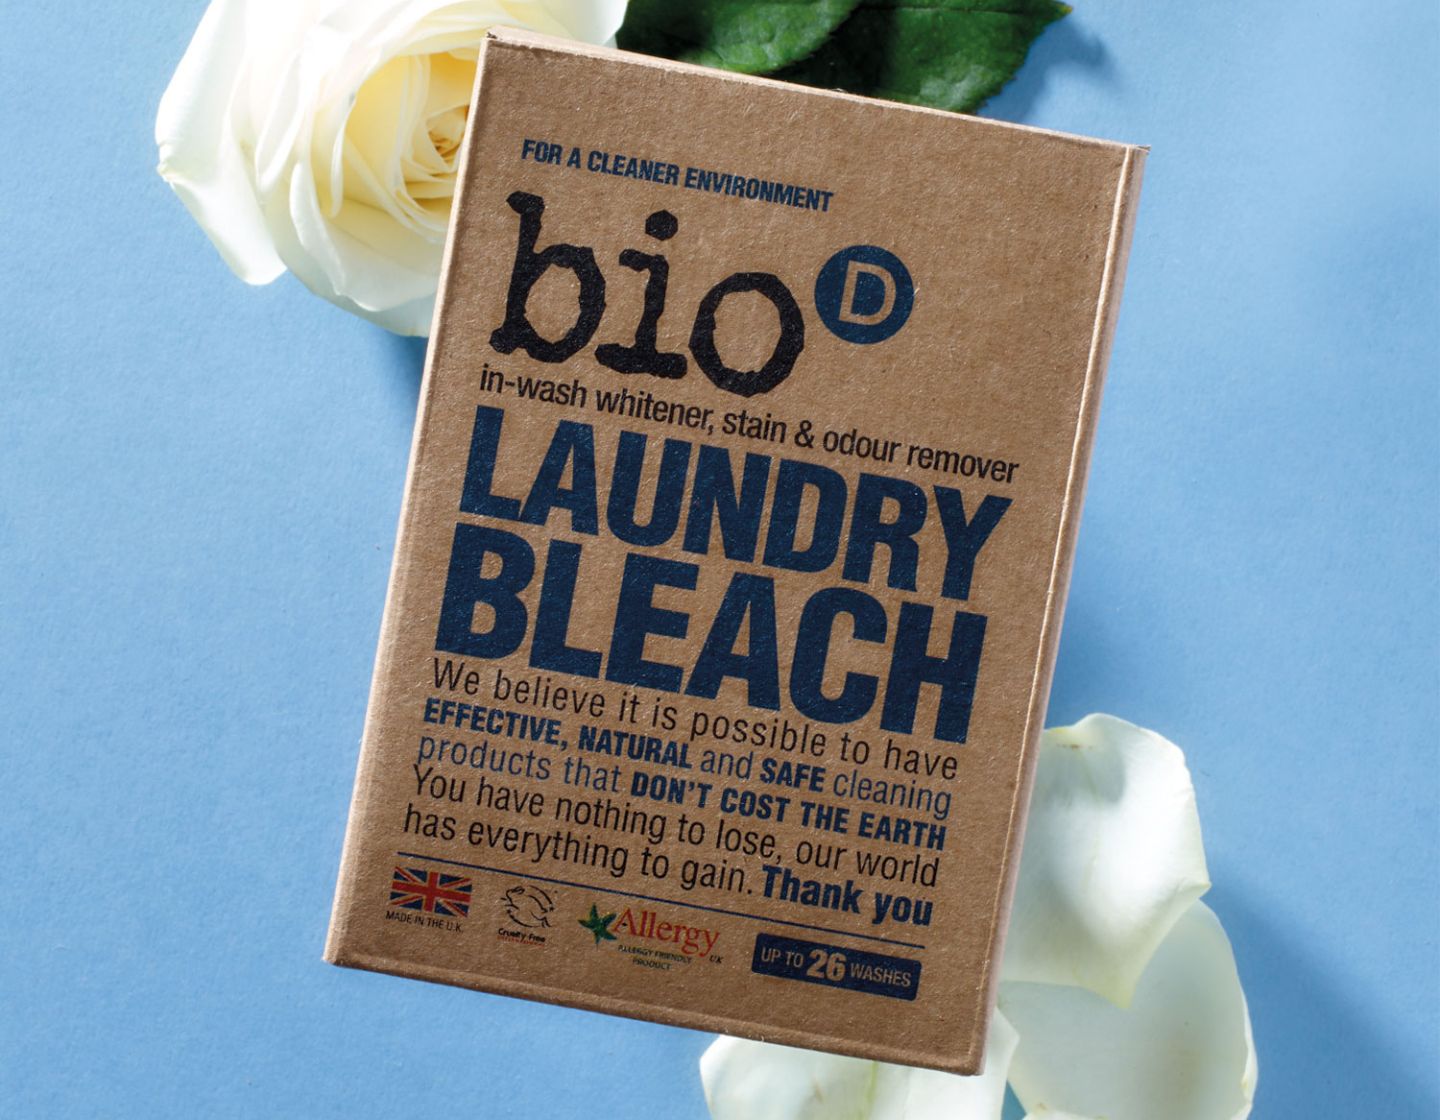 laundry-bleach-1440-x-1120